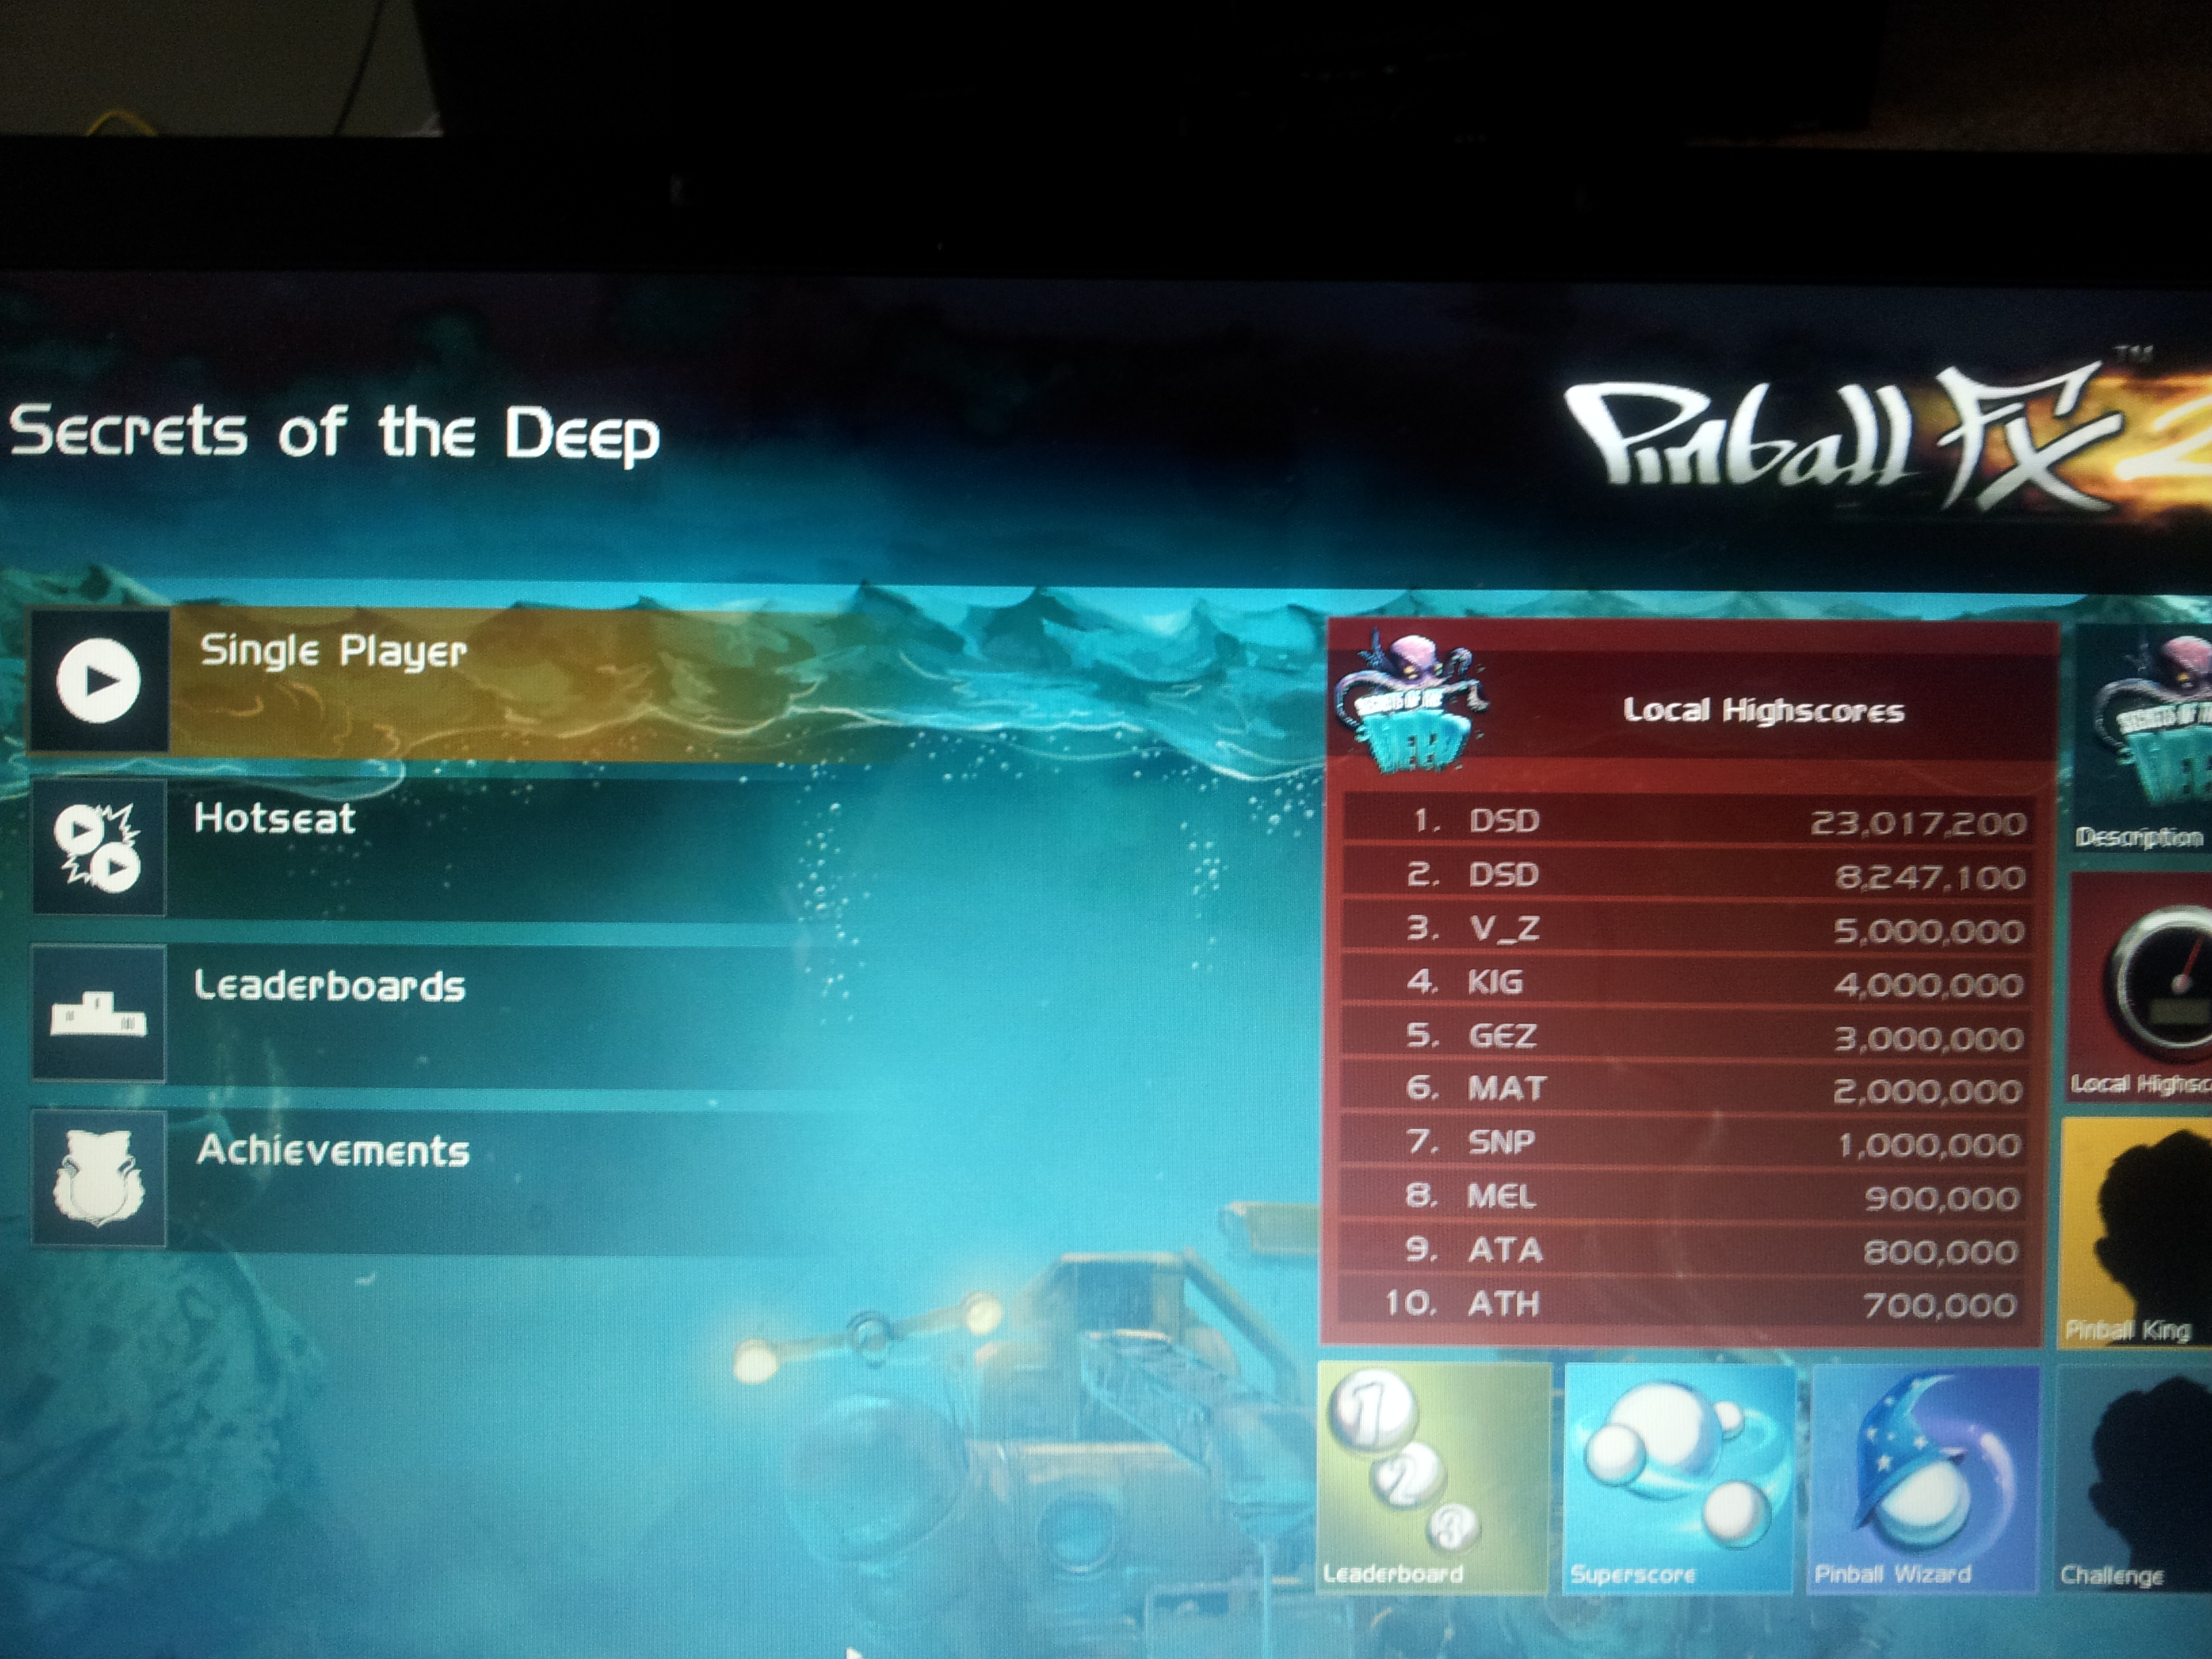 Pinball FX 2: Secrets of the Deep 23,017,200 points